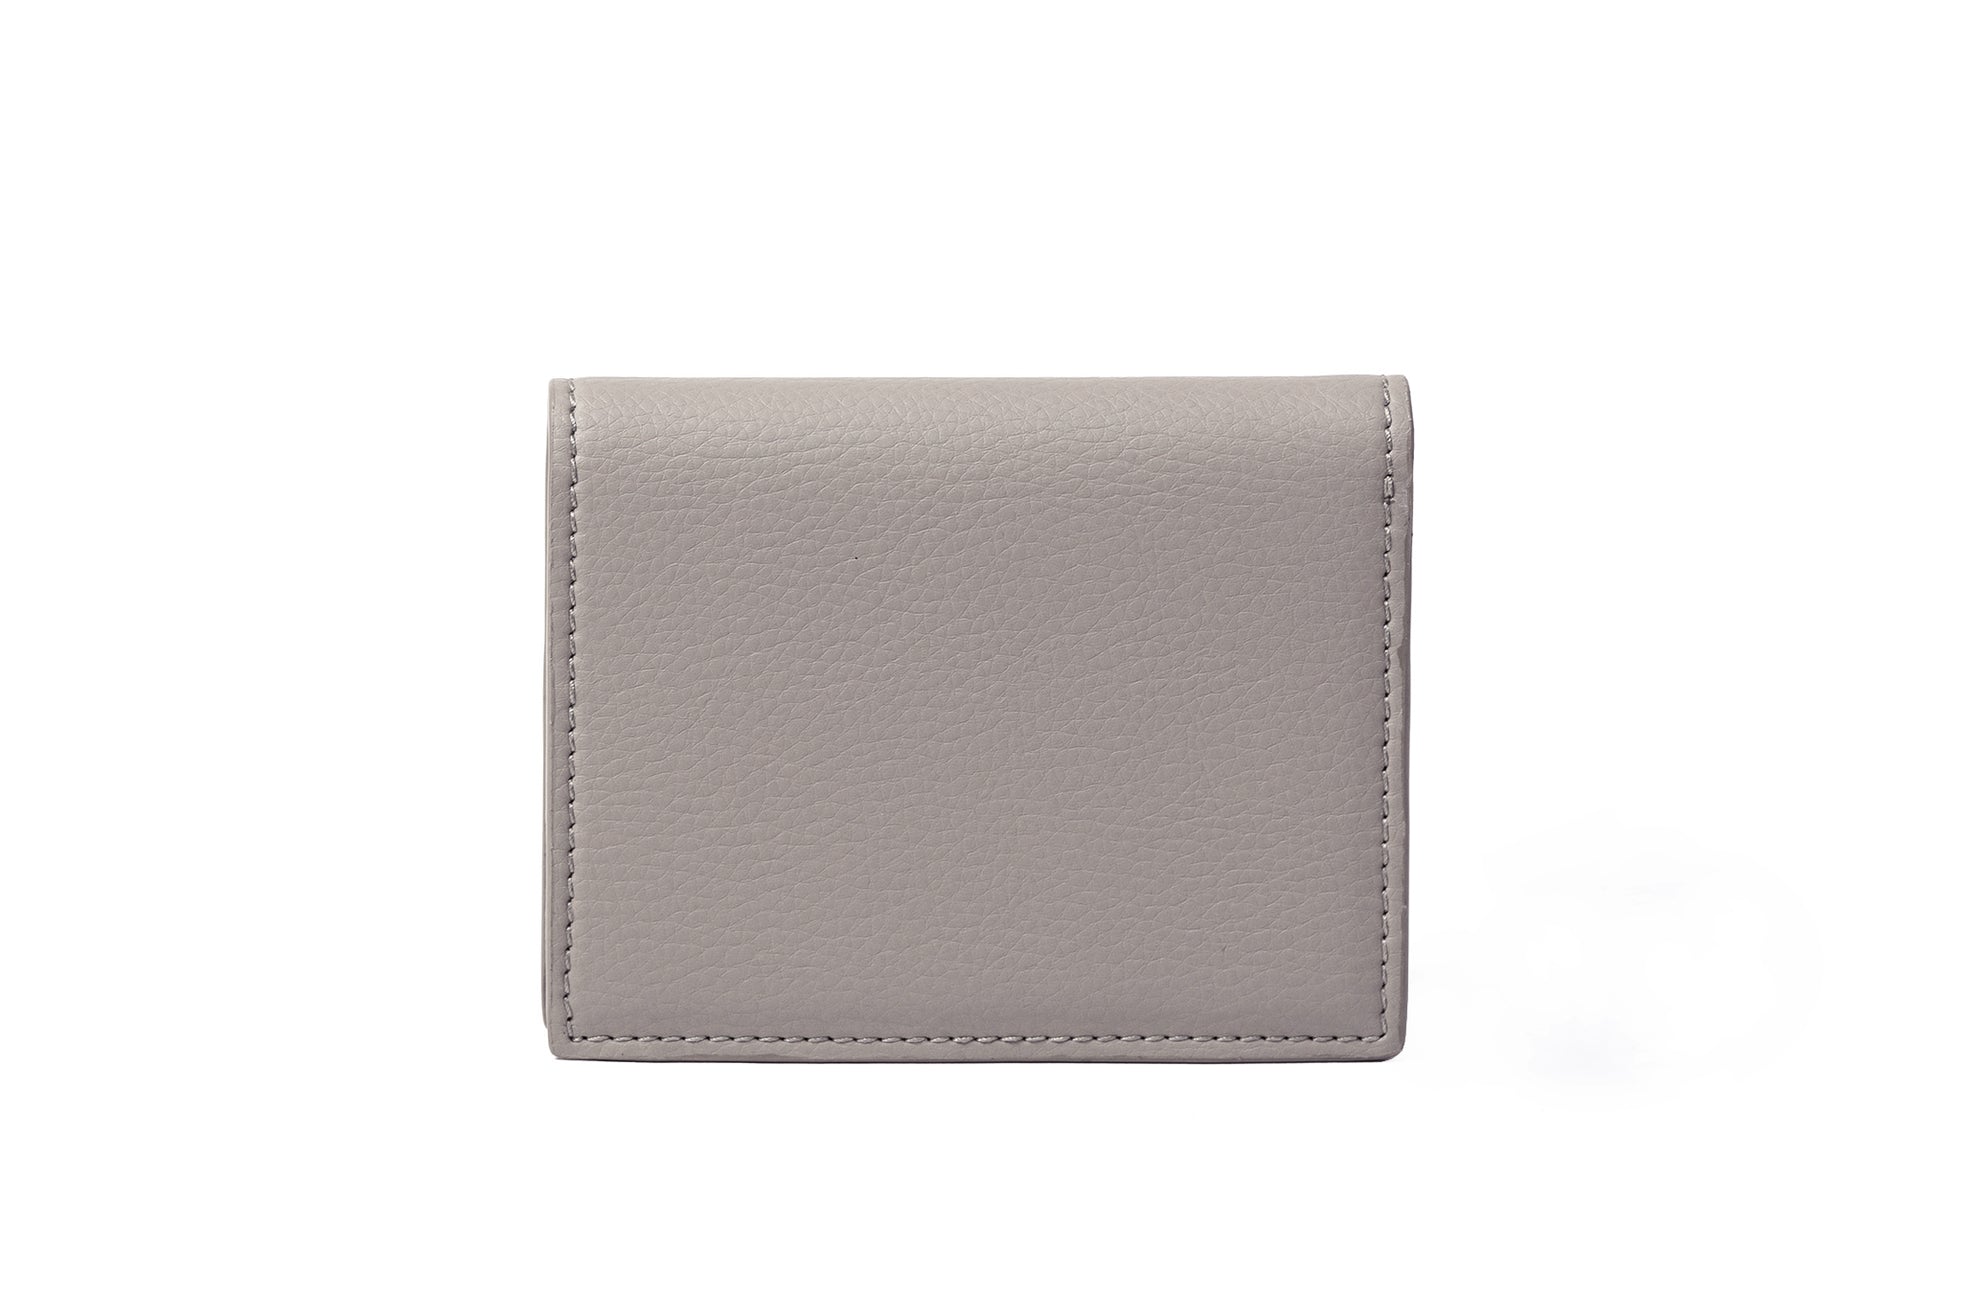 The Fold Wallet in Technik-Leather in Stone image 3